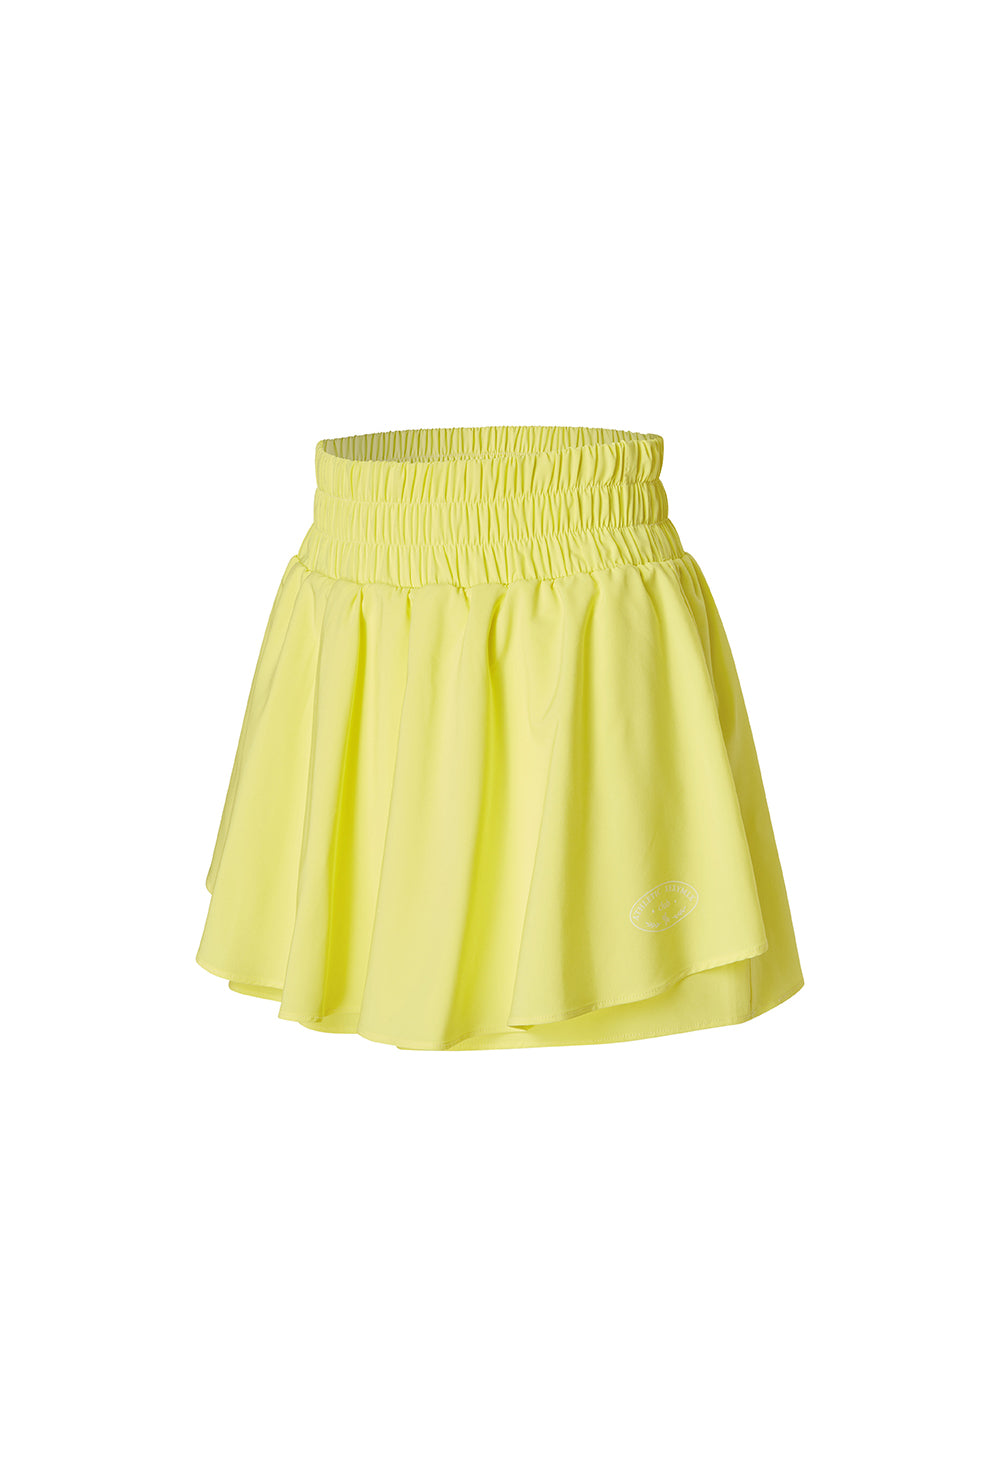 2-in-1 Layered Shorts - Lemon Drop